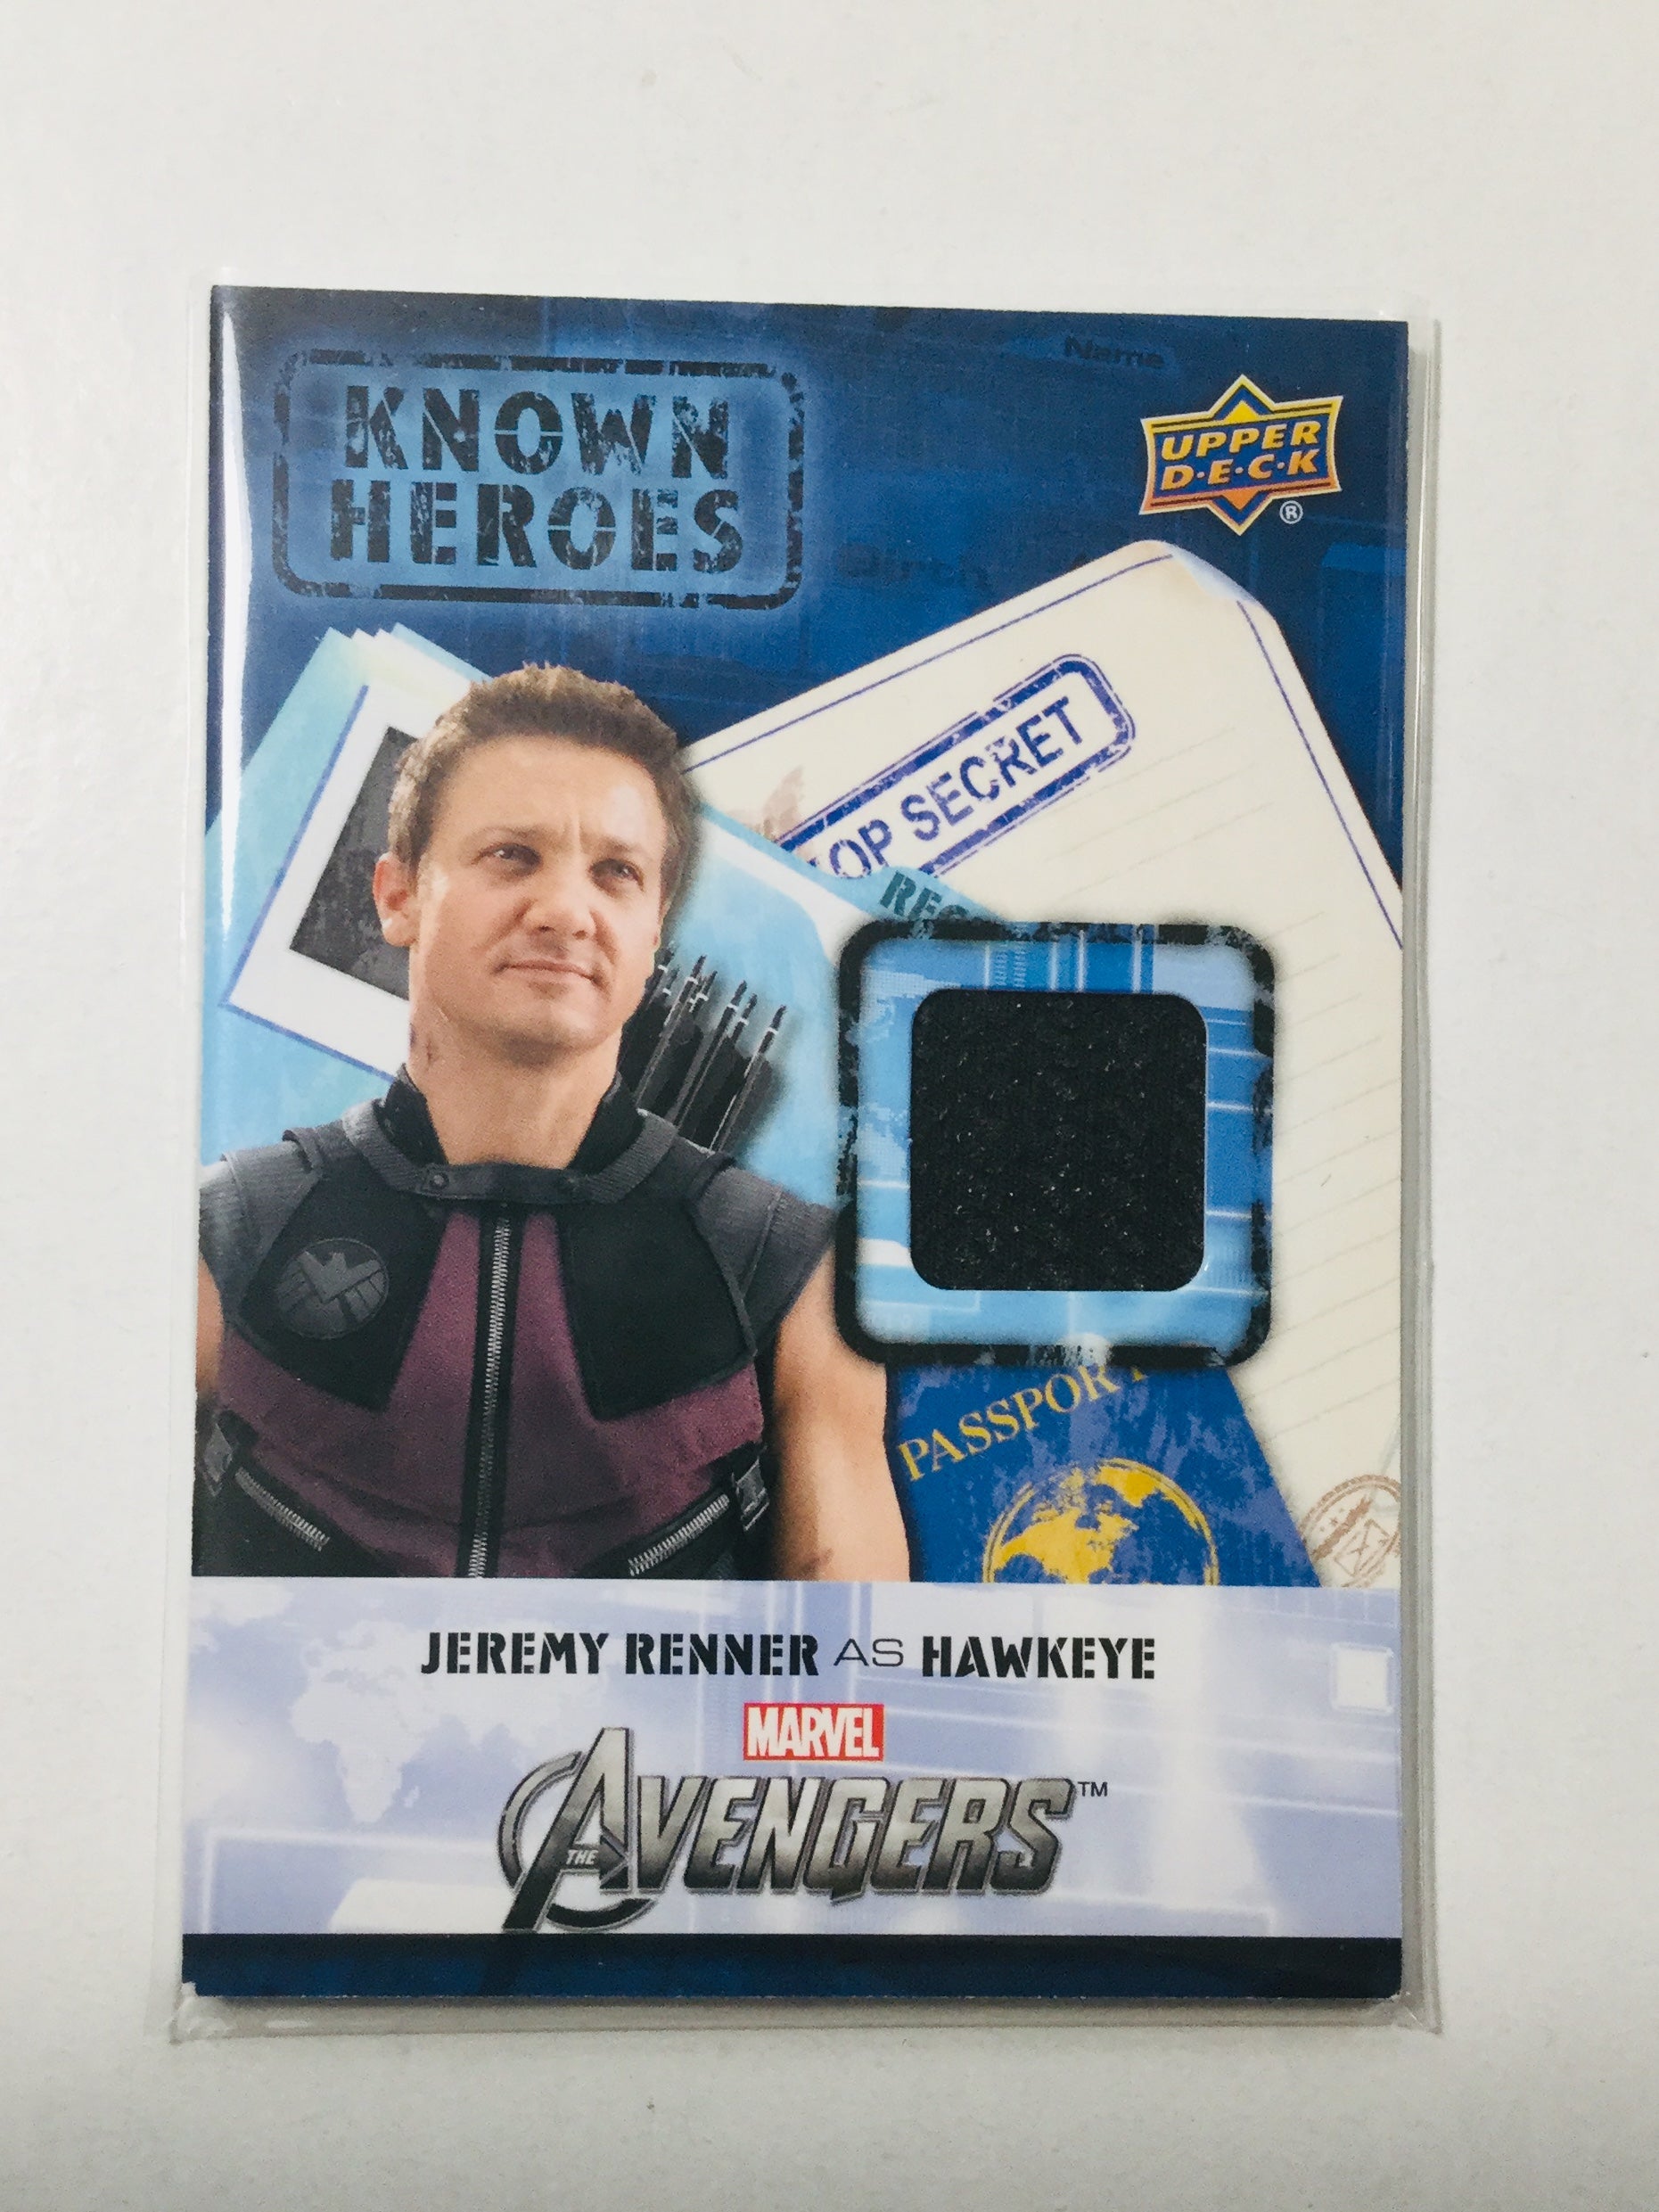 Avengers Hawkeye rare memorabilia insert card